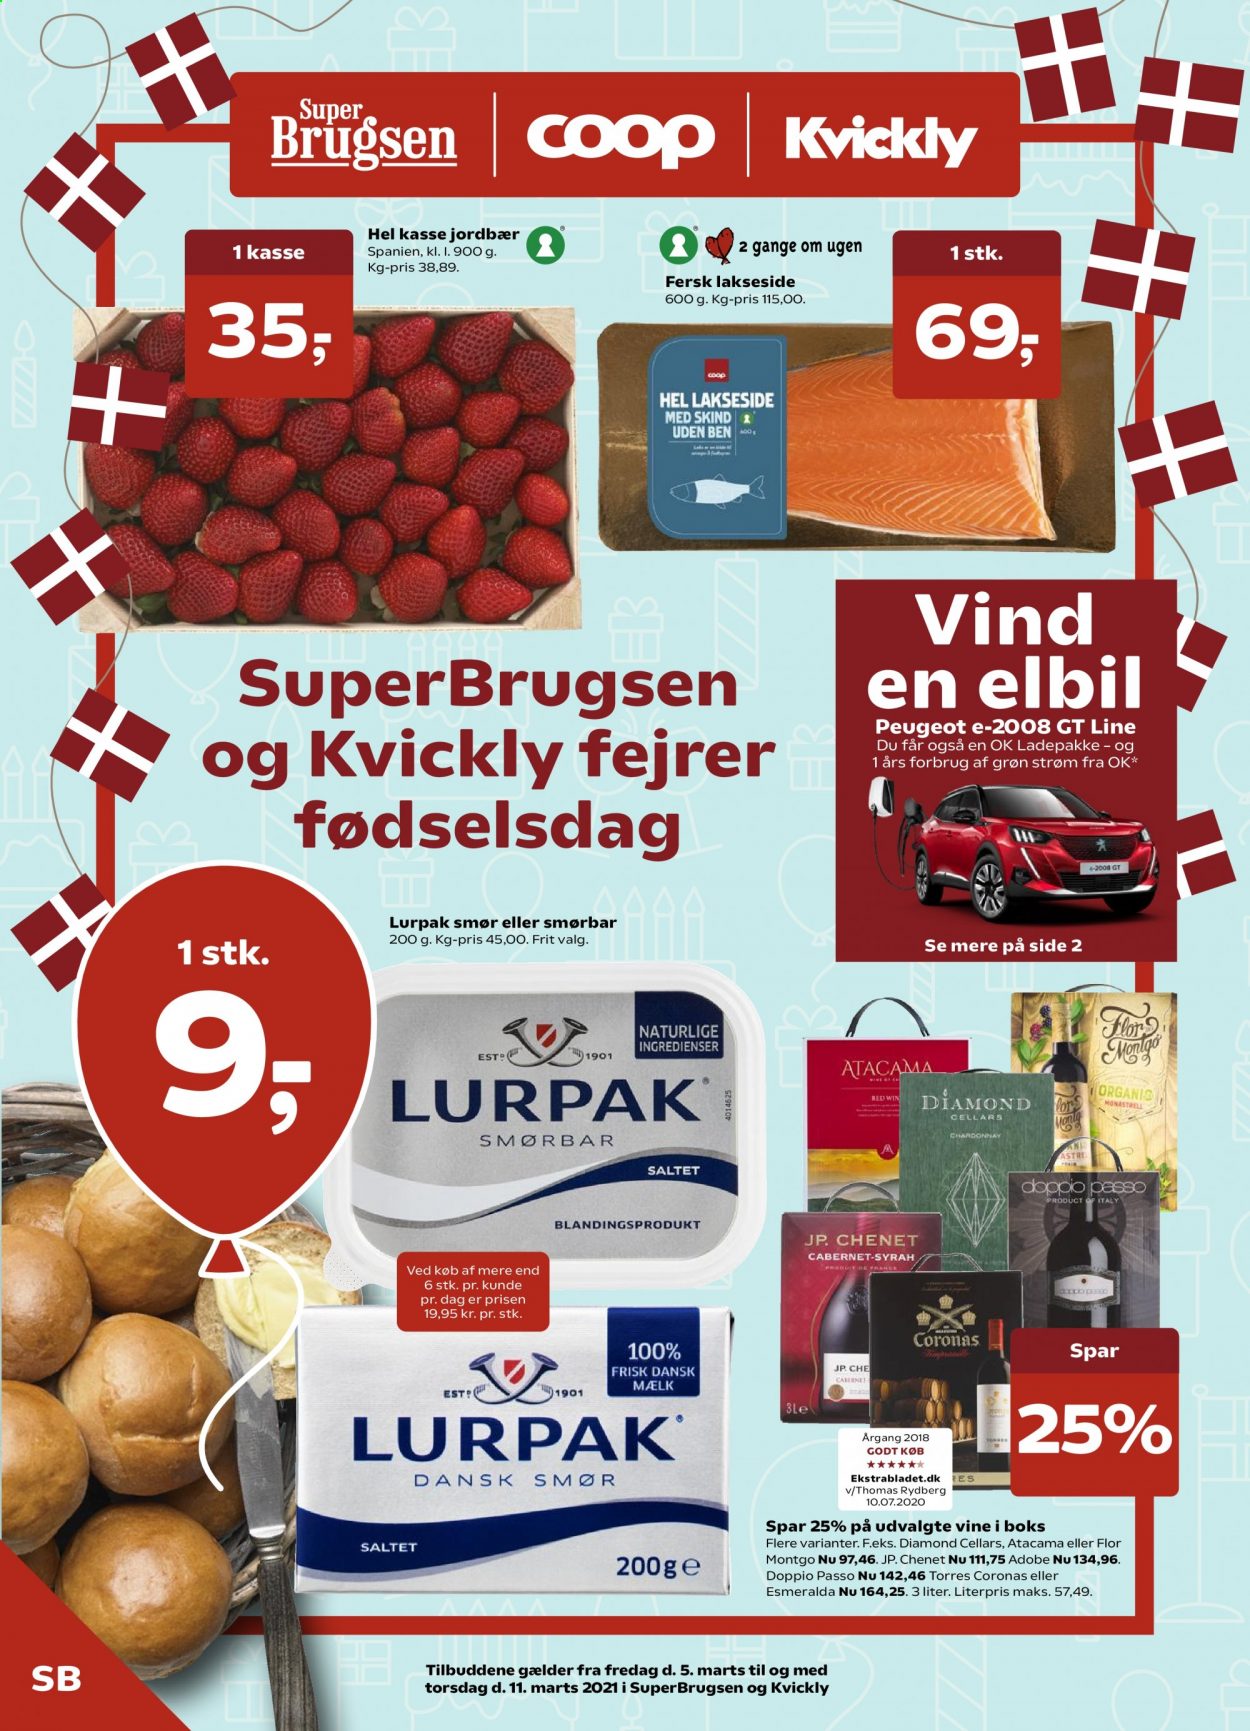 thumbnail - SuperBrugsen tilbud  - 5.3.2021 - 11.3.2021 - tilbudsprodukter - jordbær, laksefilet, mælk, smør, Lurpak, smørbar. Side 1.